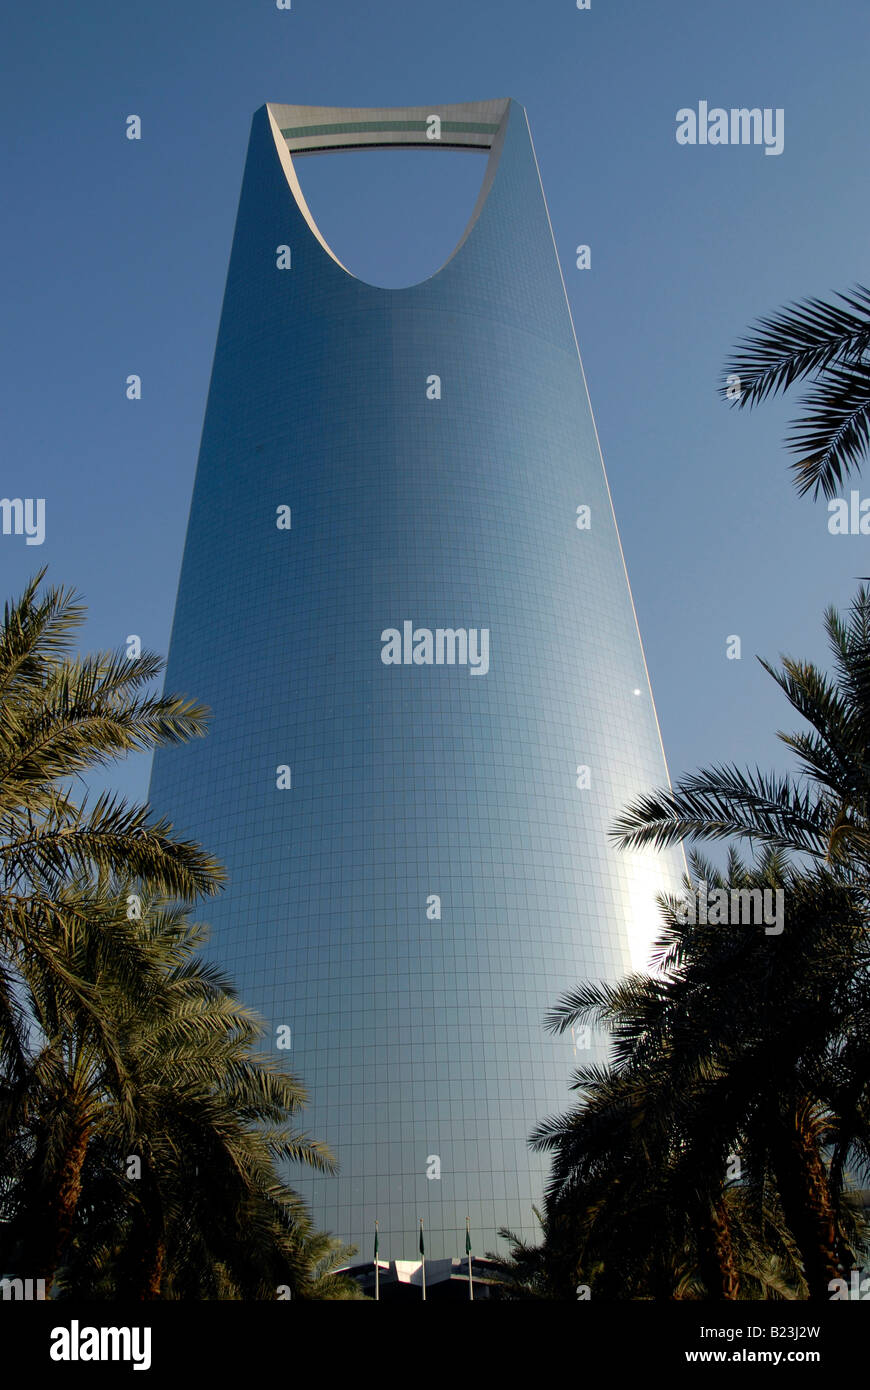 The Kingdom Tower - Al Mamlakah - the tallest skyscraper in Saudi Arabia dominating the skyline of Riyadh, Saudi Arabia. Stock Photo